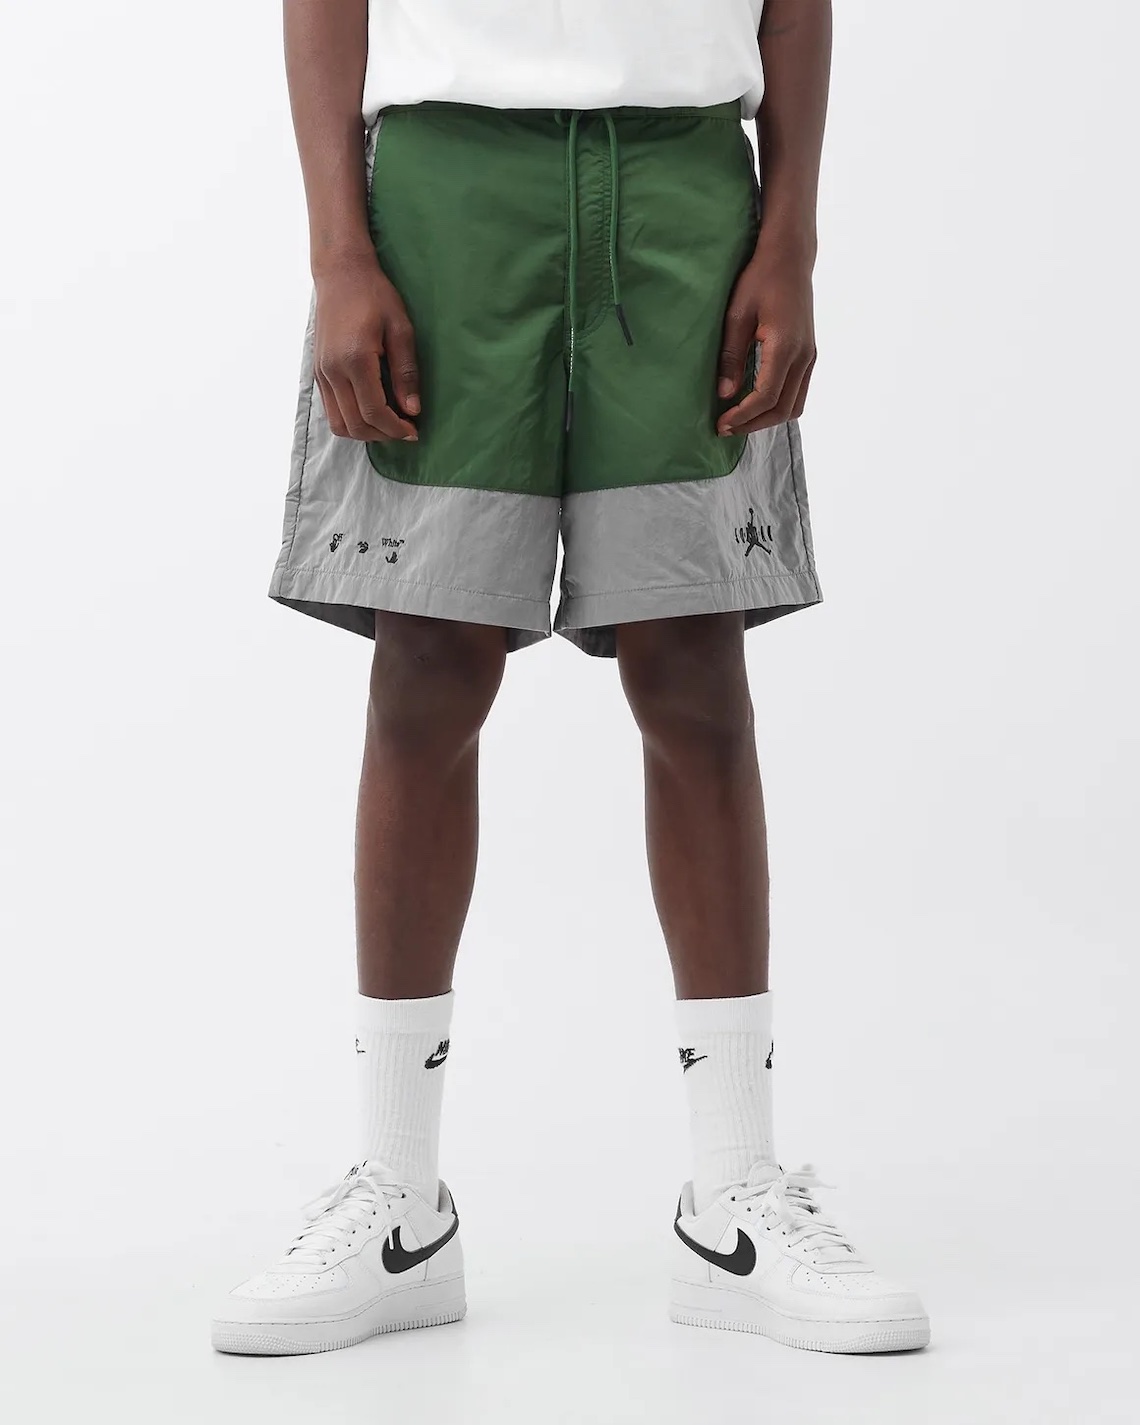 Off-White Air Jordan 2 Low Apparel Collection | SneakerNews.com